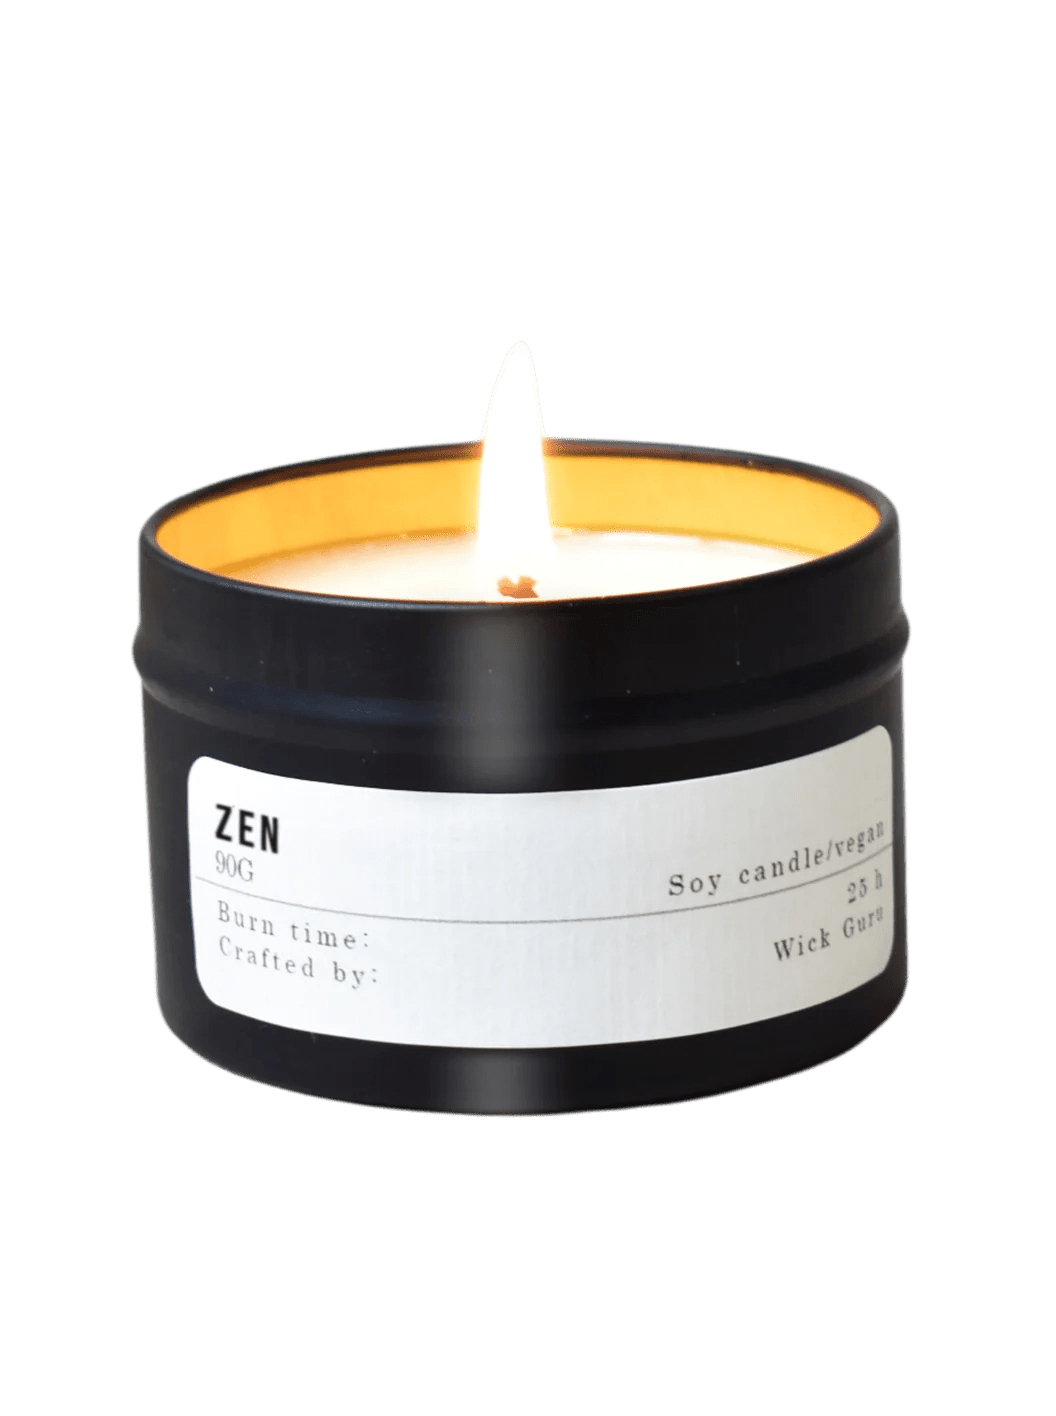 Zen Candle | Green Tea + Cassis + Amber - Wick Guru